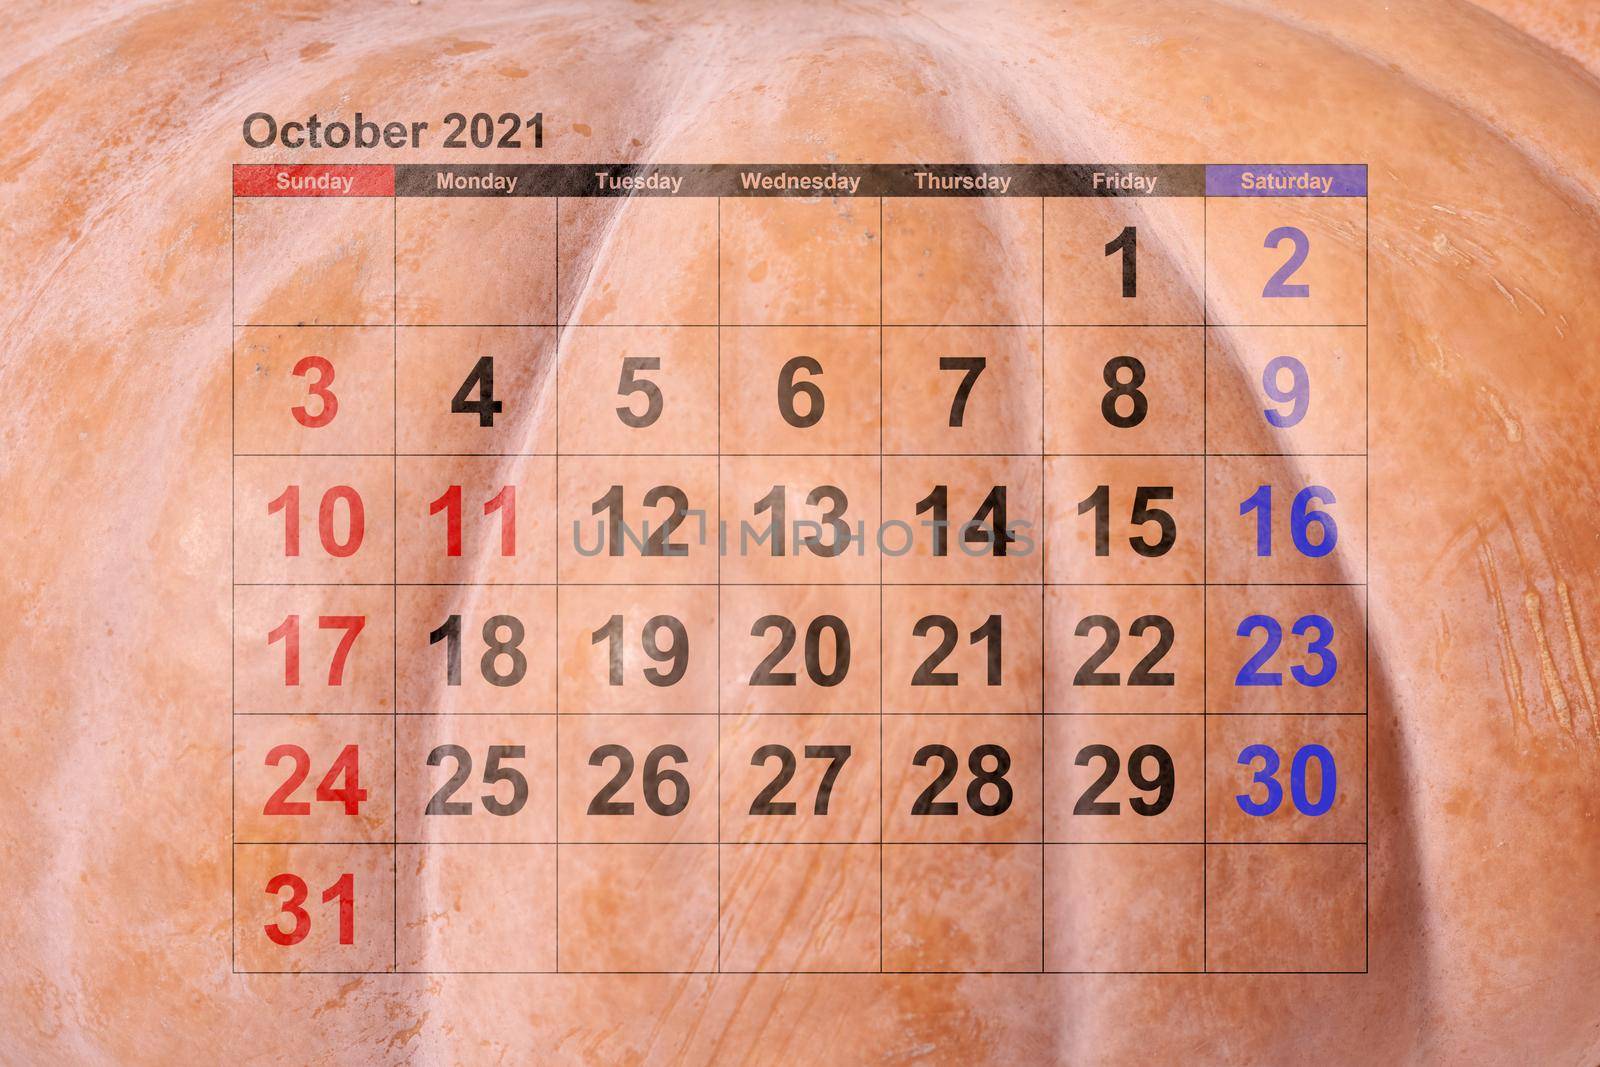 Close-up of pumpkin surface and October monthly calendar